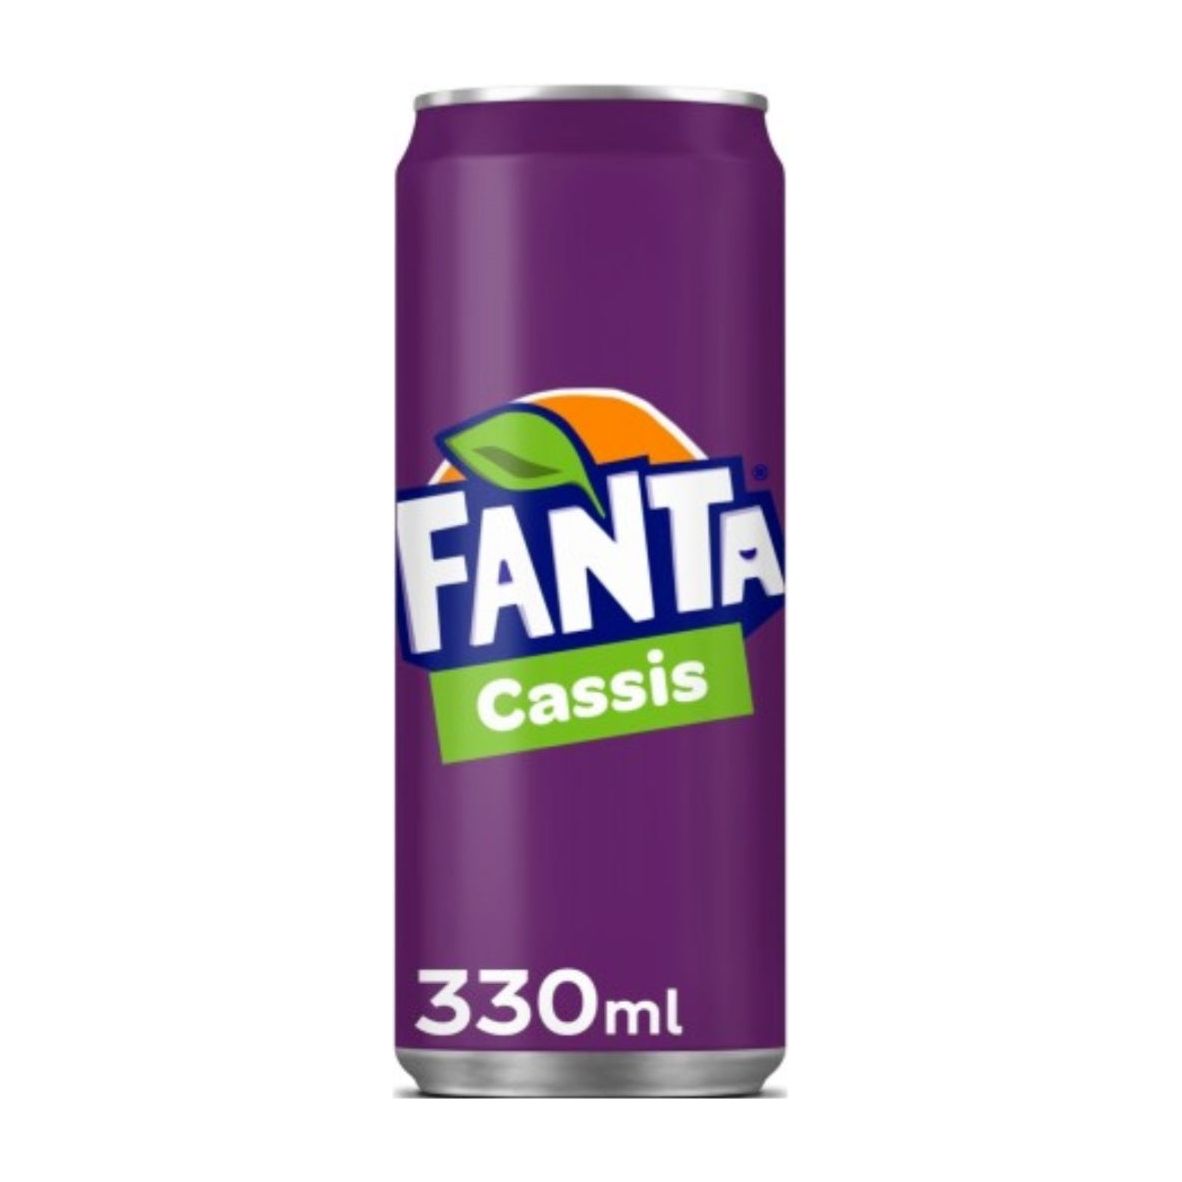 Fanta Cassis Original Excl Statiegeld 24x330ml